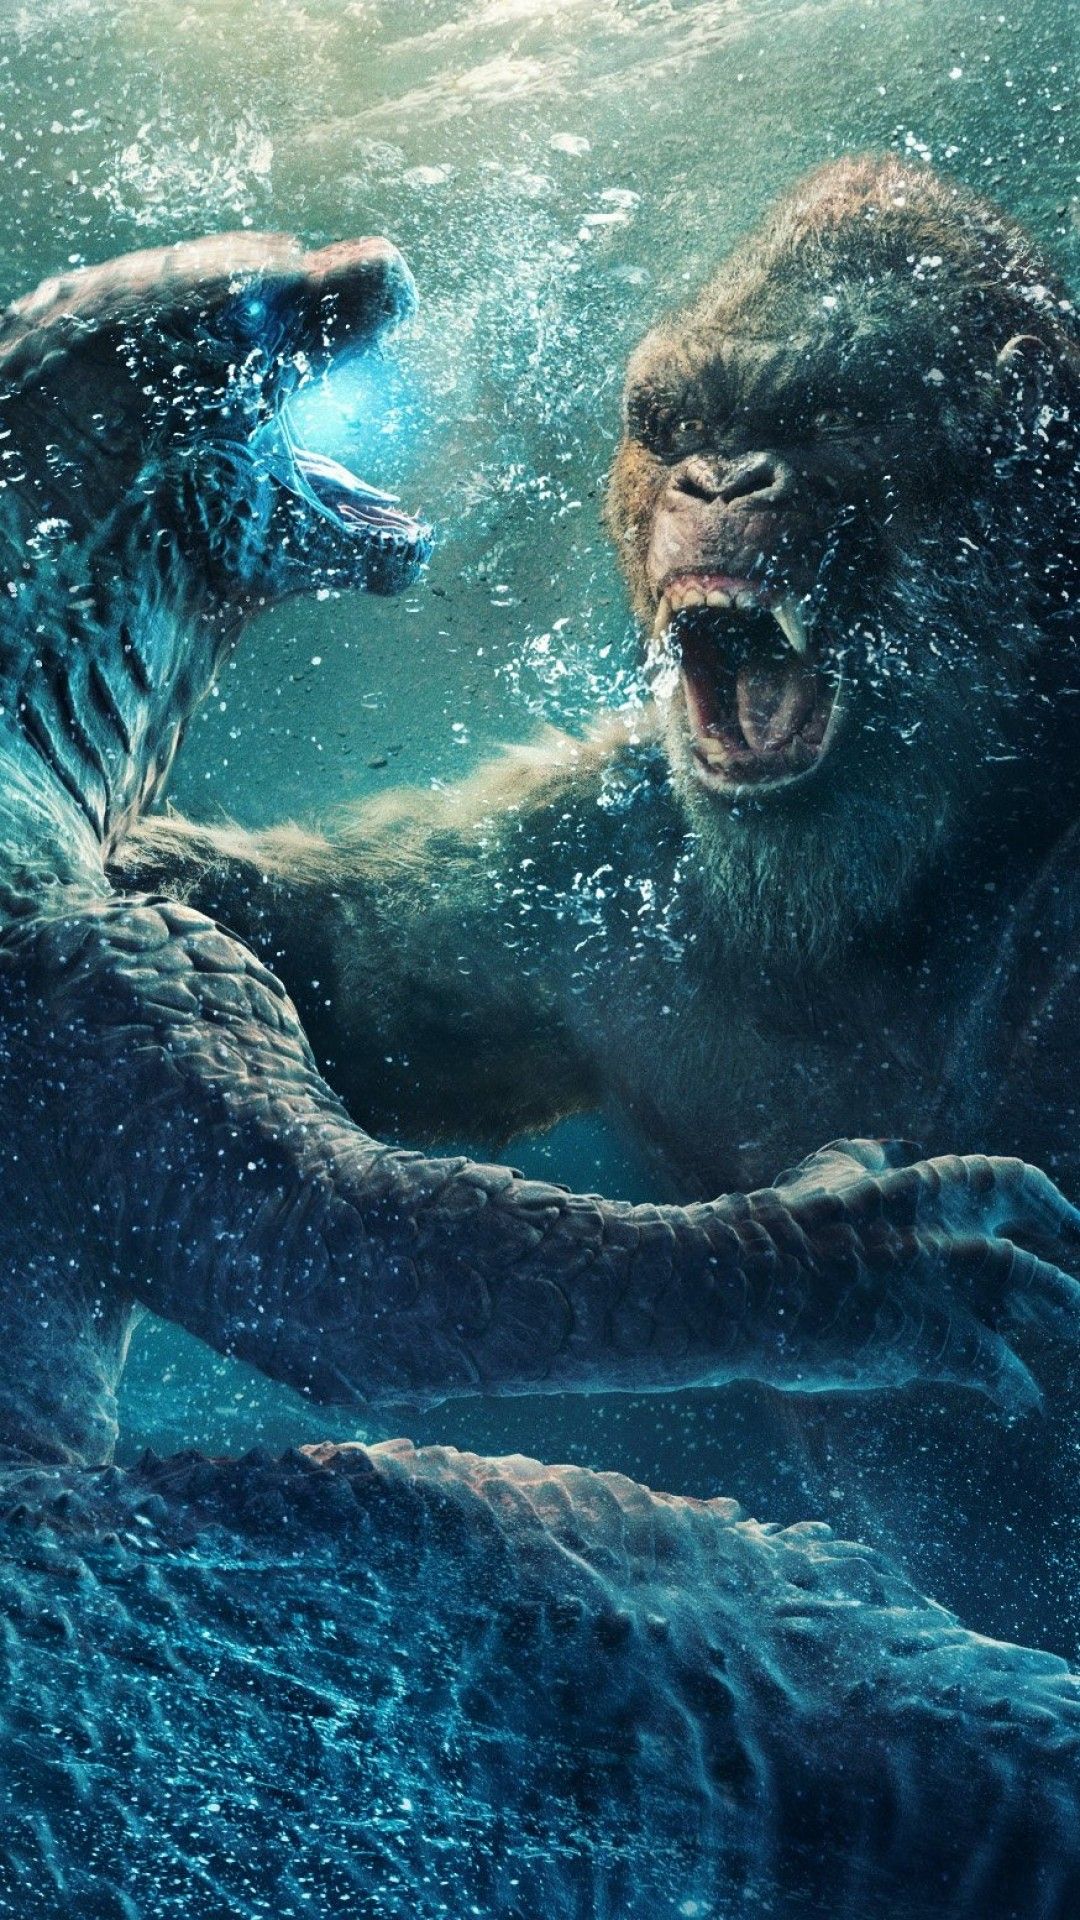 Legendary Godzilla Vs Kong Wallpaper HD, Godzilla 2014 HD Wallpaper. Godzilla wallpaper, King kong